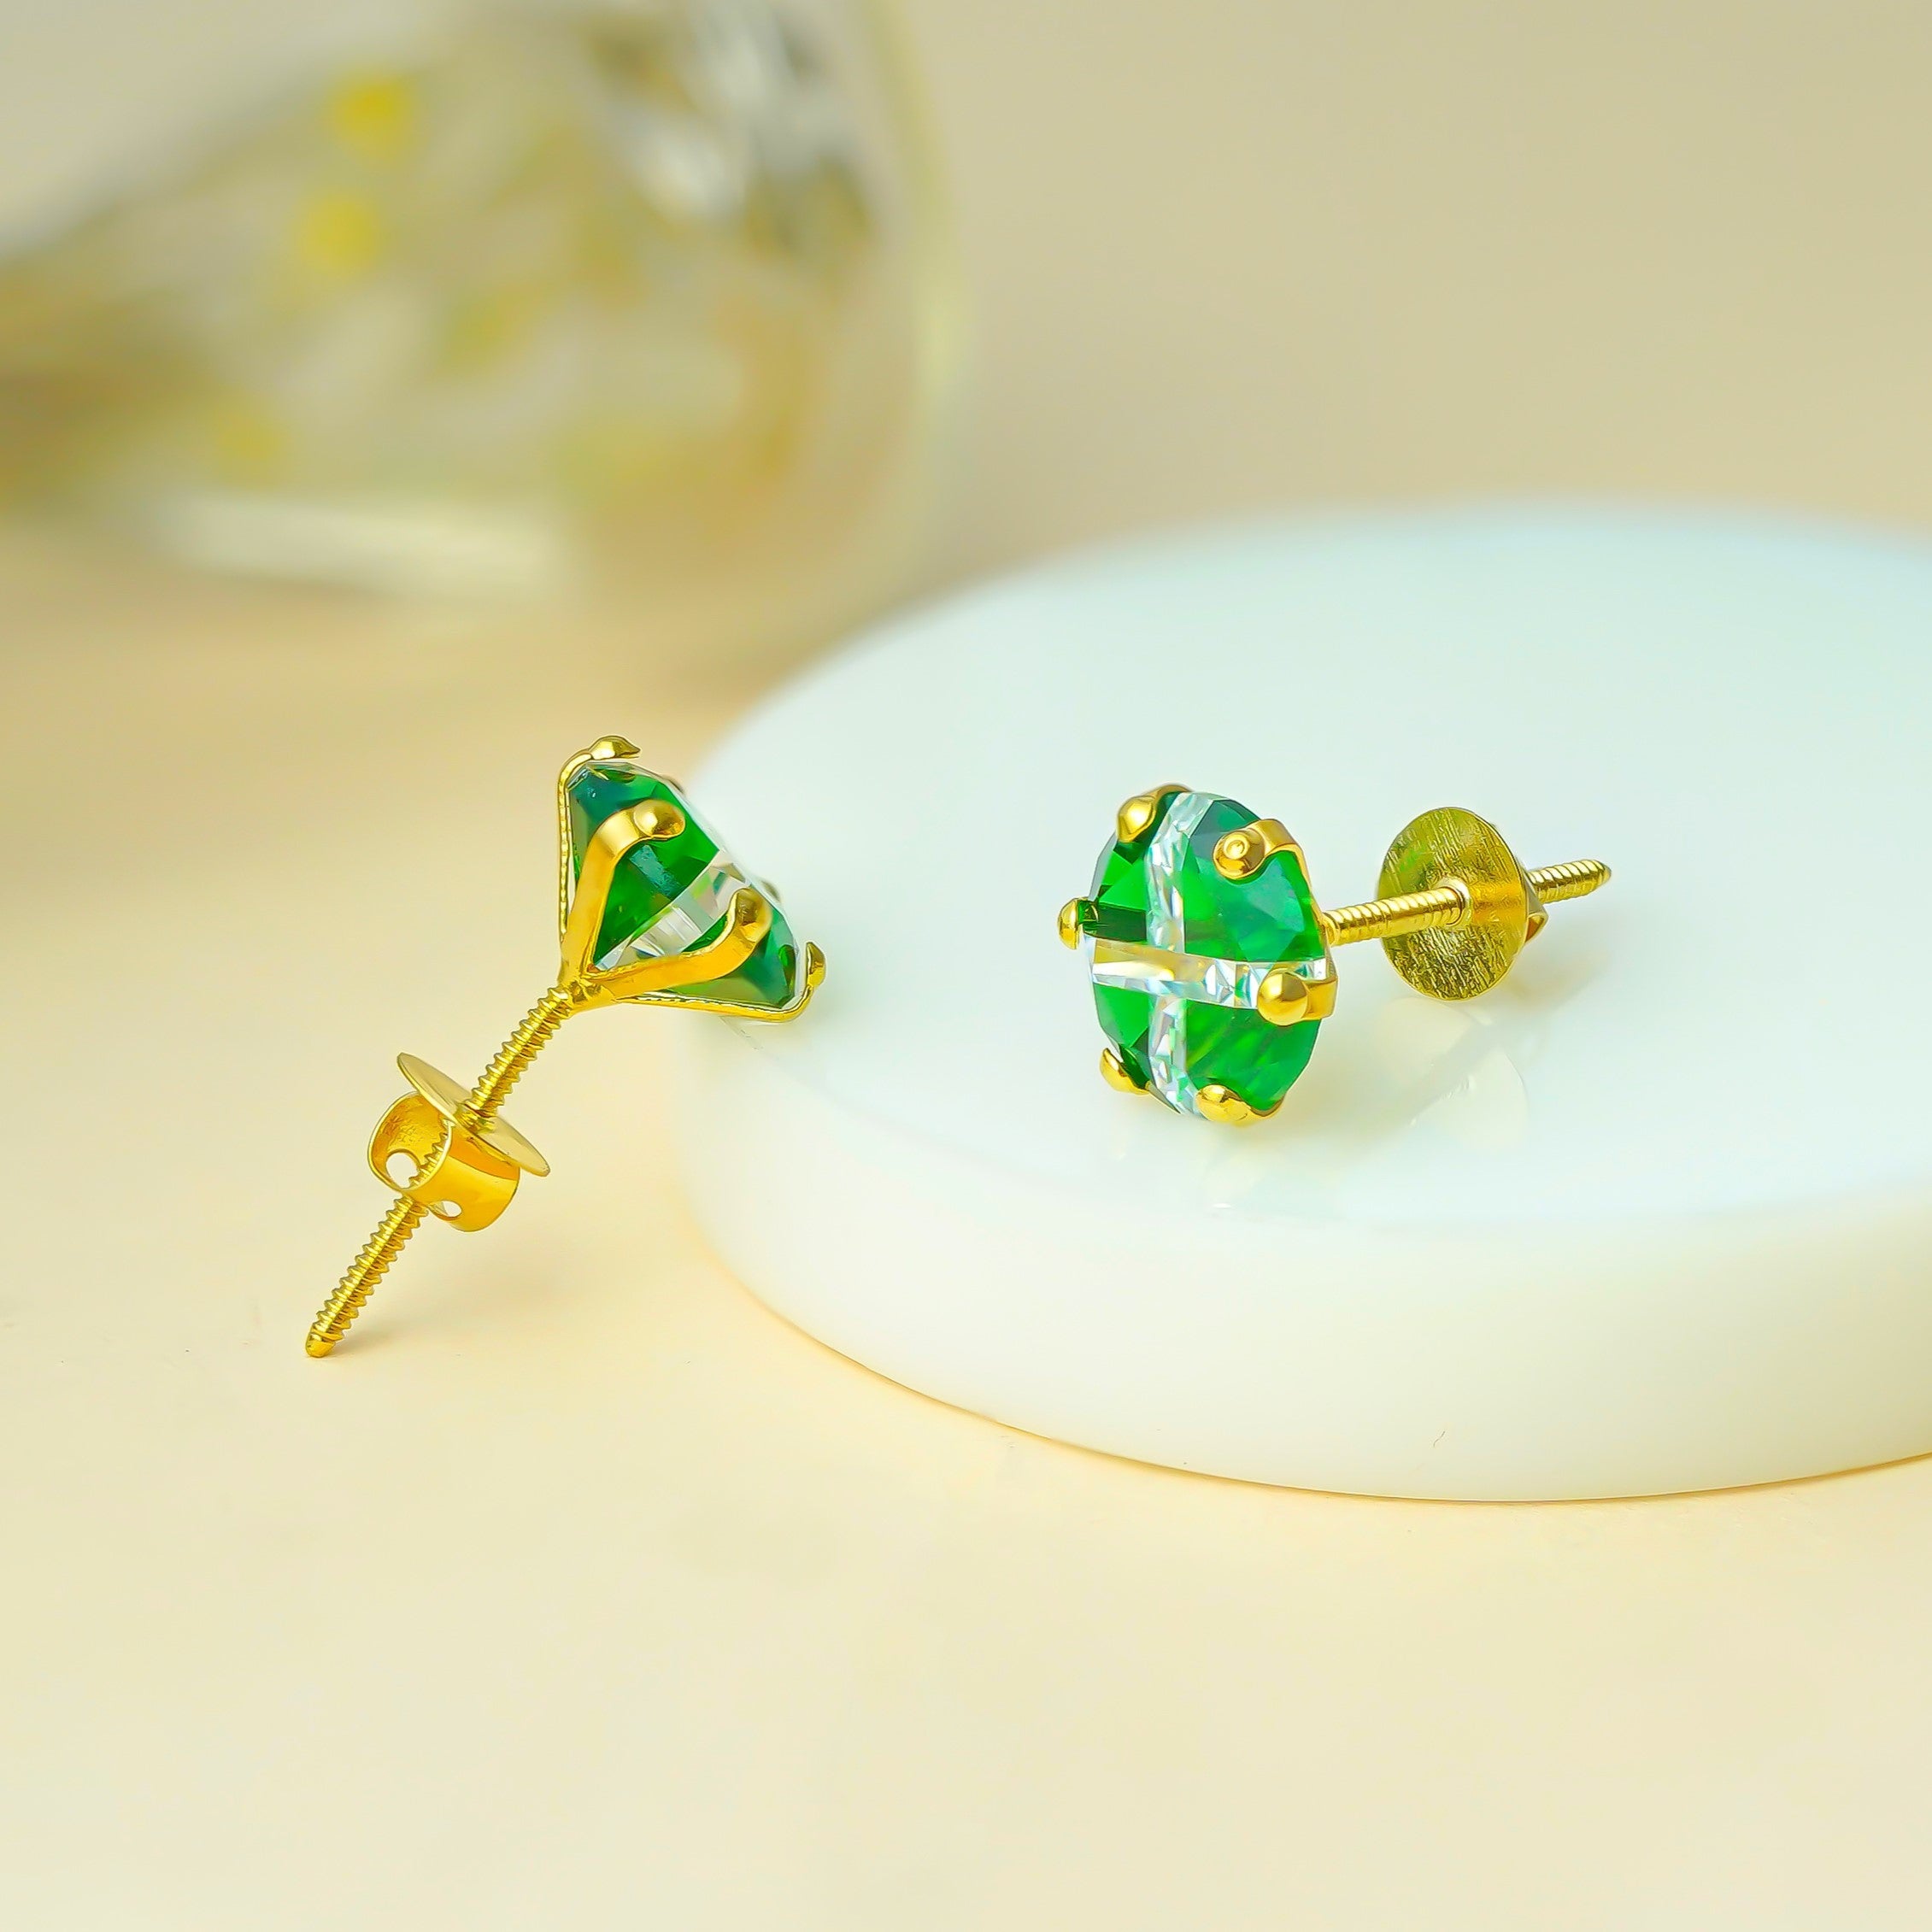 10 KT Gold Green New Round Cut Diamond Stud Earrings